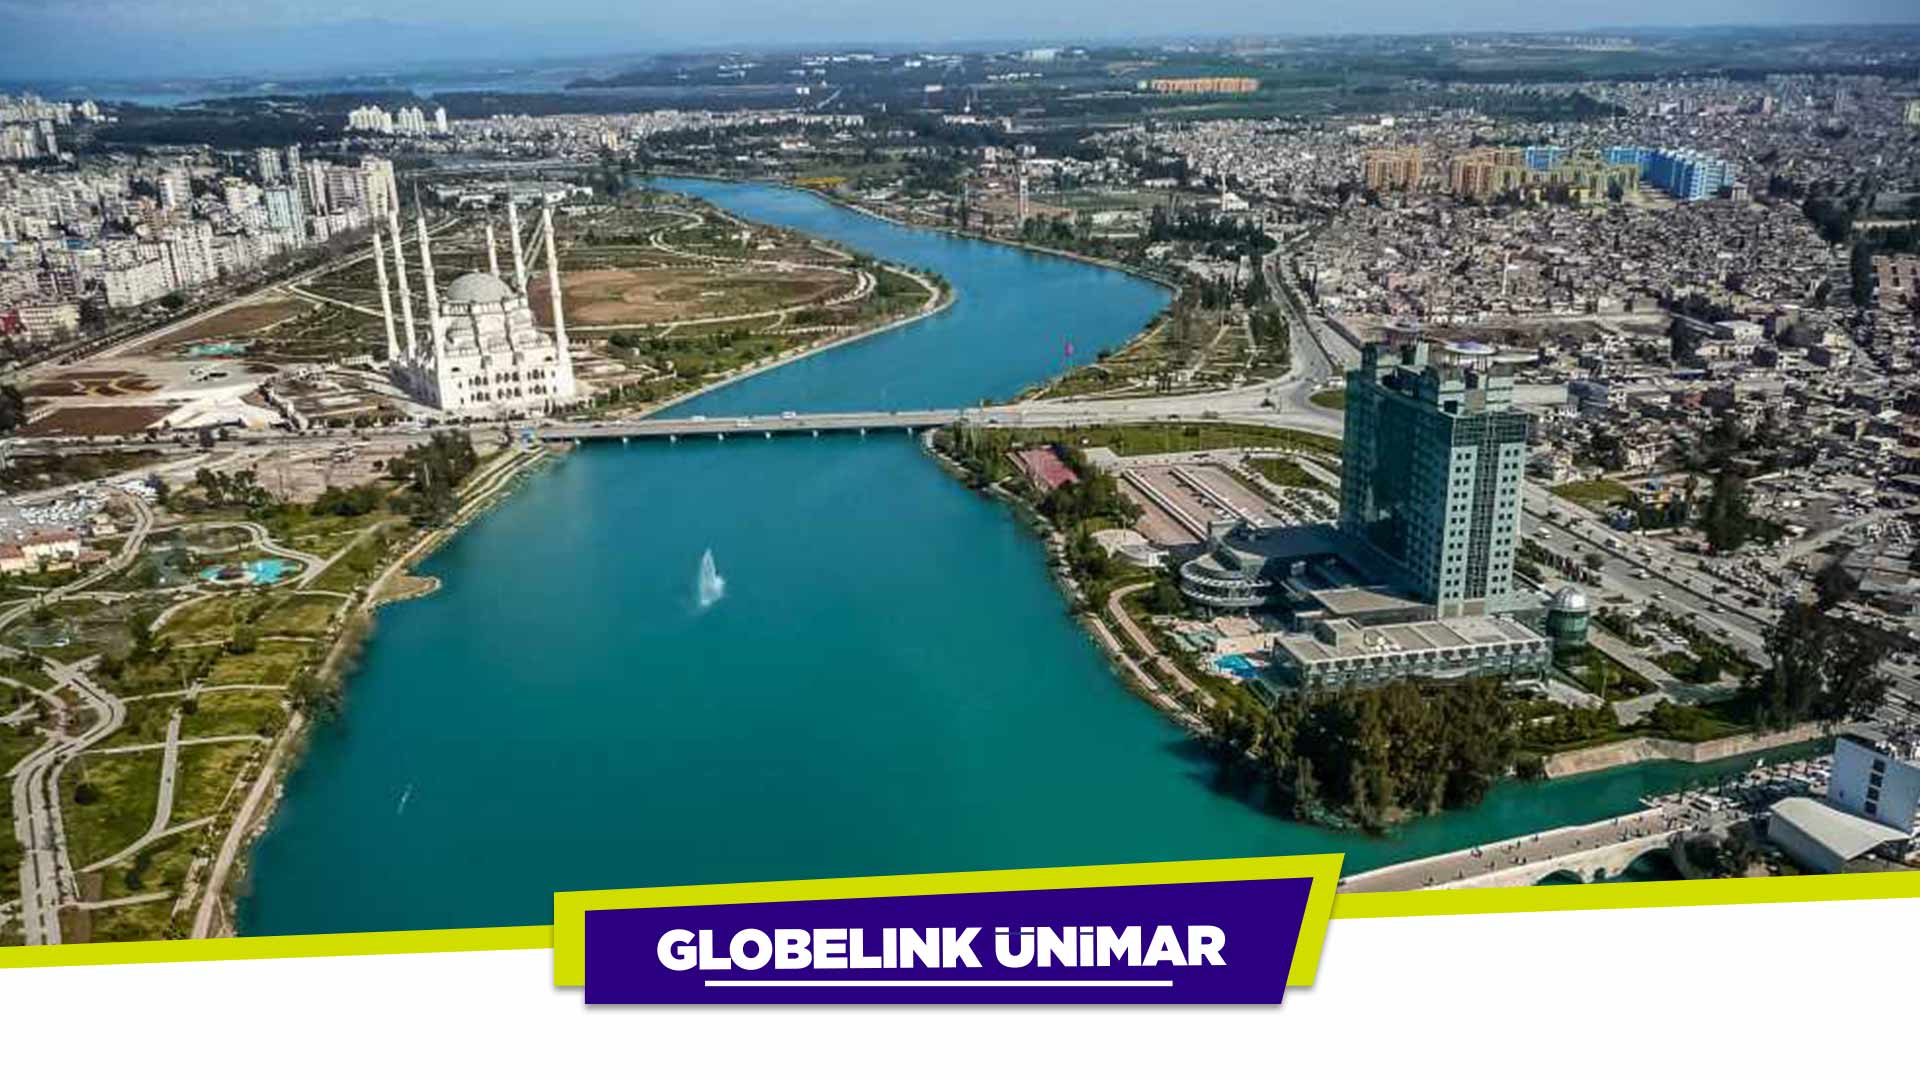 Globelink Ünimar Has Opened Its 10th Office in Adana